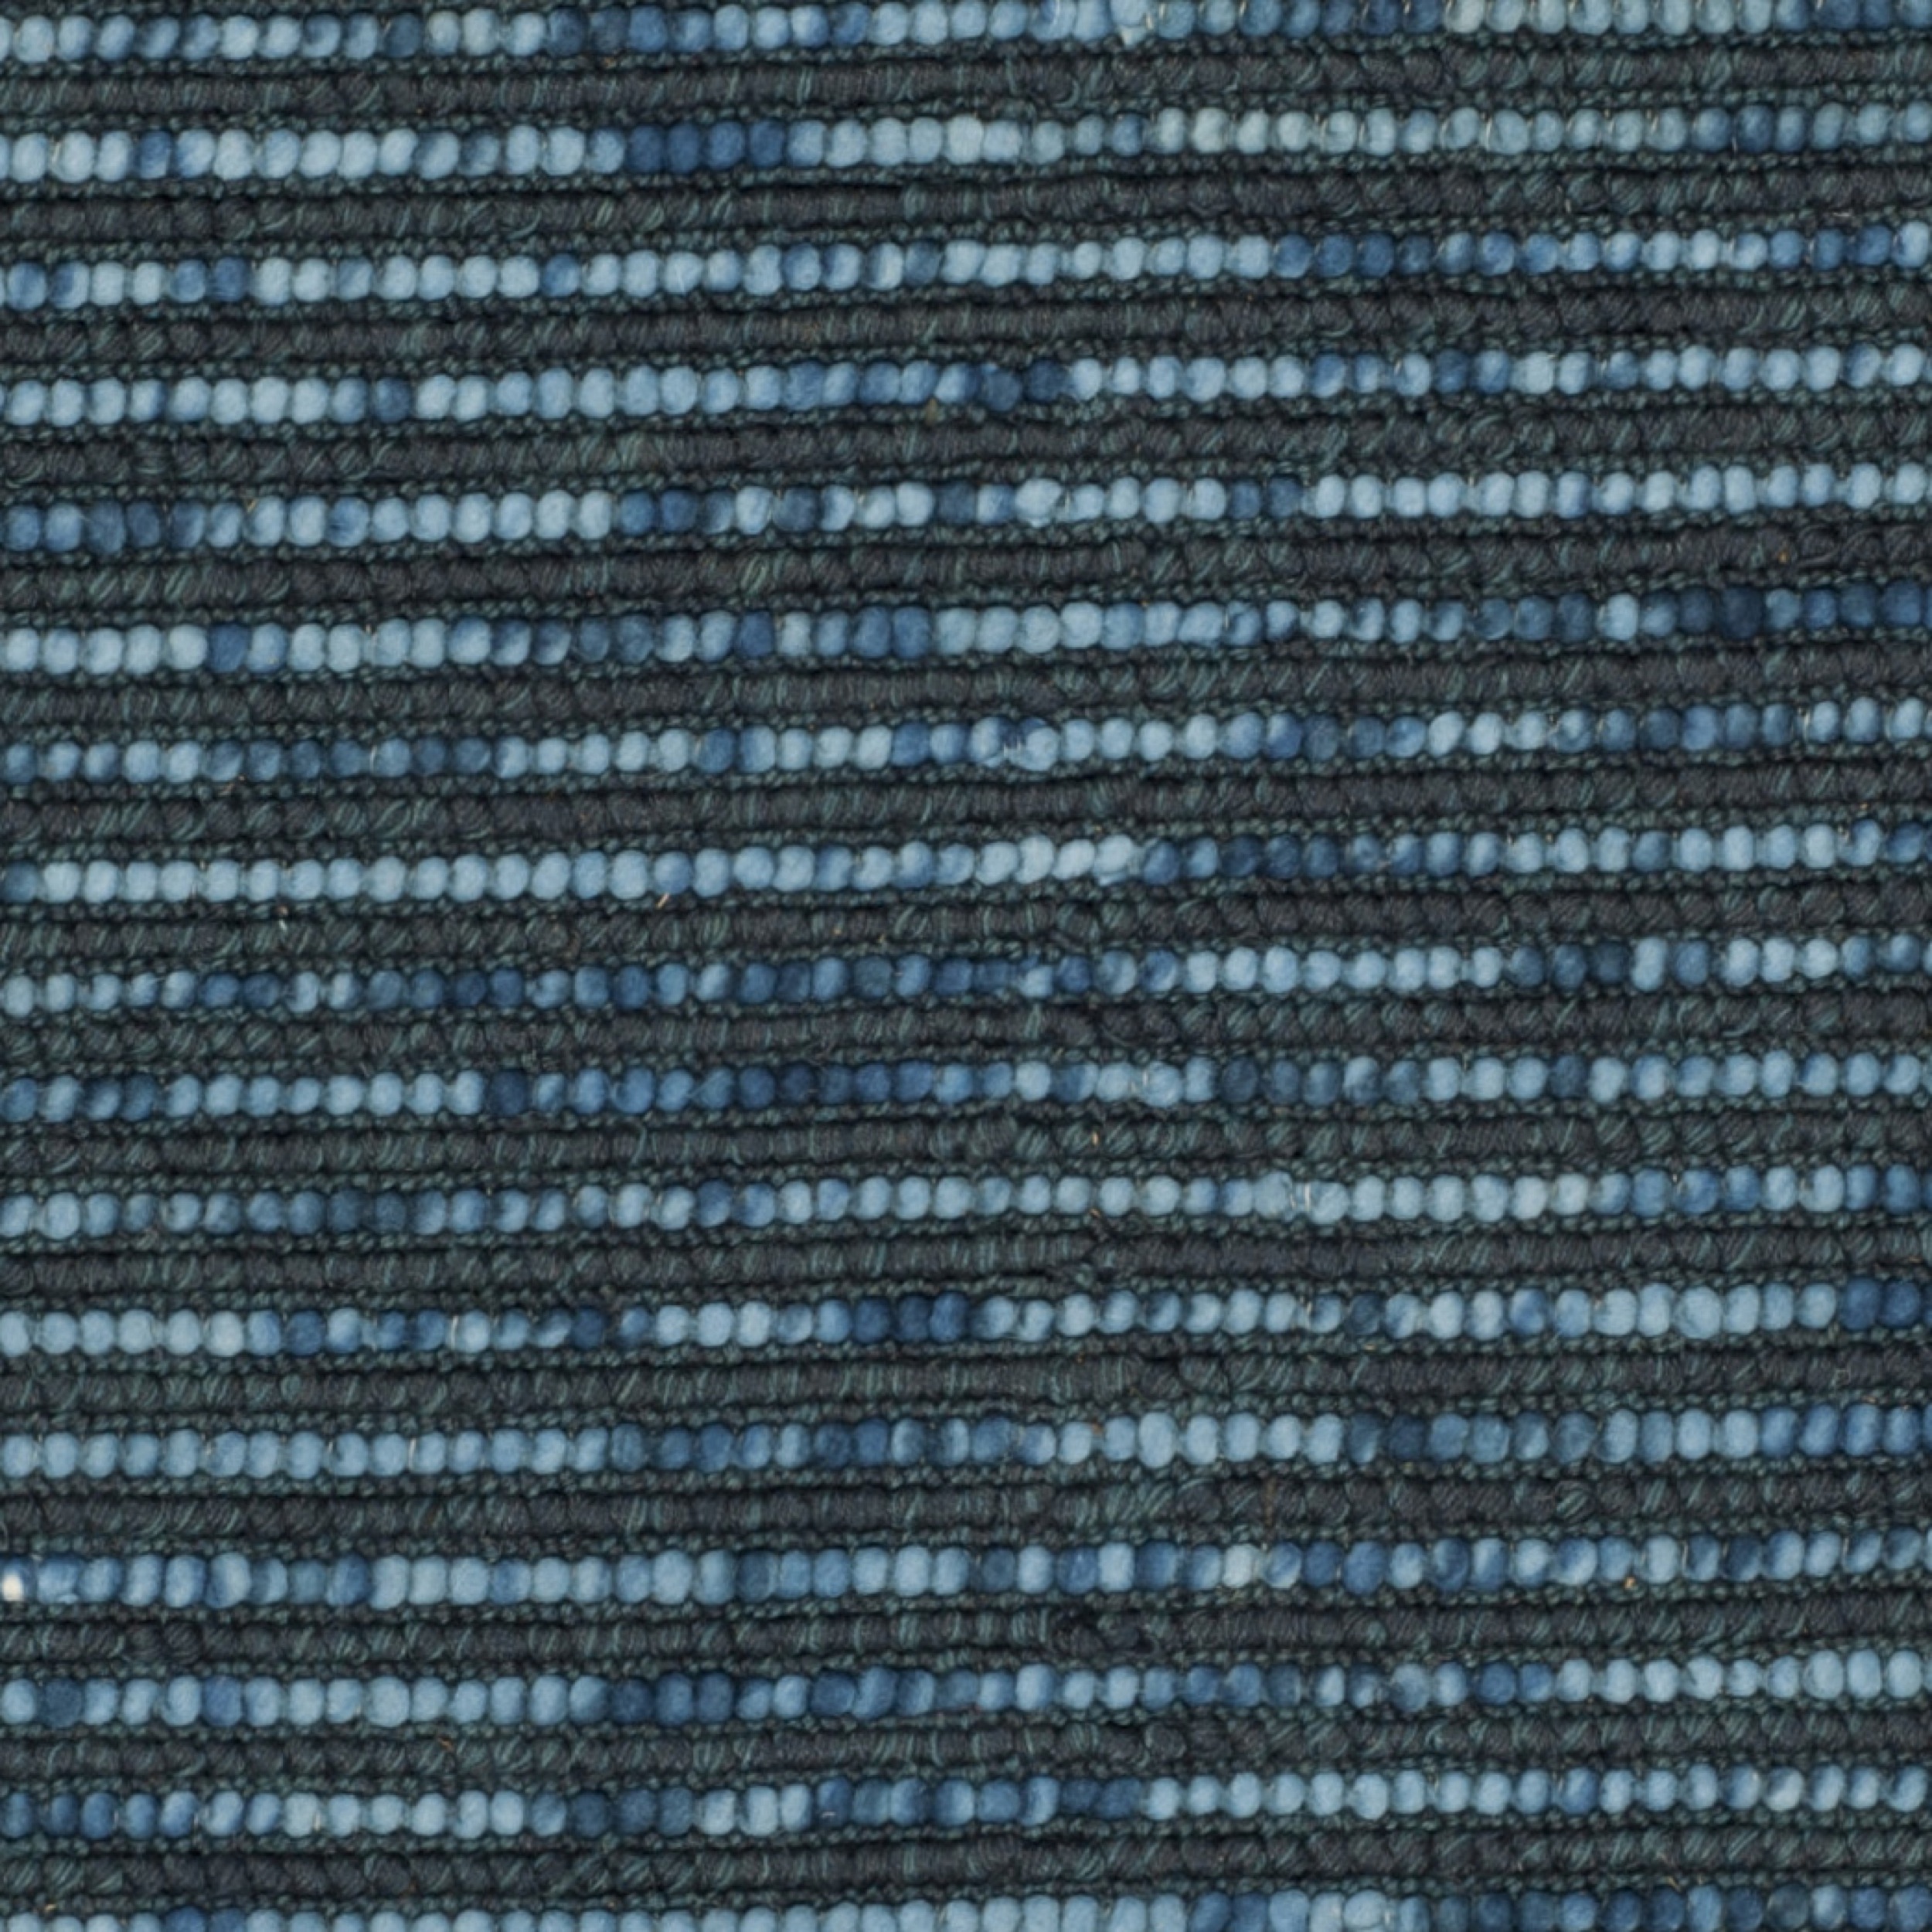 SAFAVIEH Bohemian Nel Transitional Braided Striped Area Rug, Dark Blue/Multi, 11' x 15' - image 3 of 5